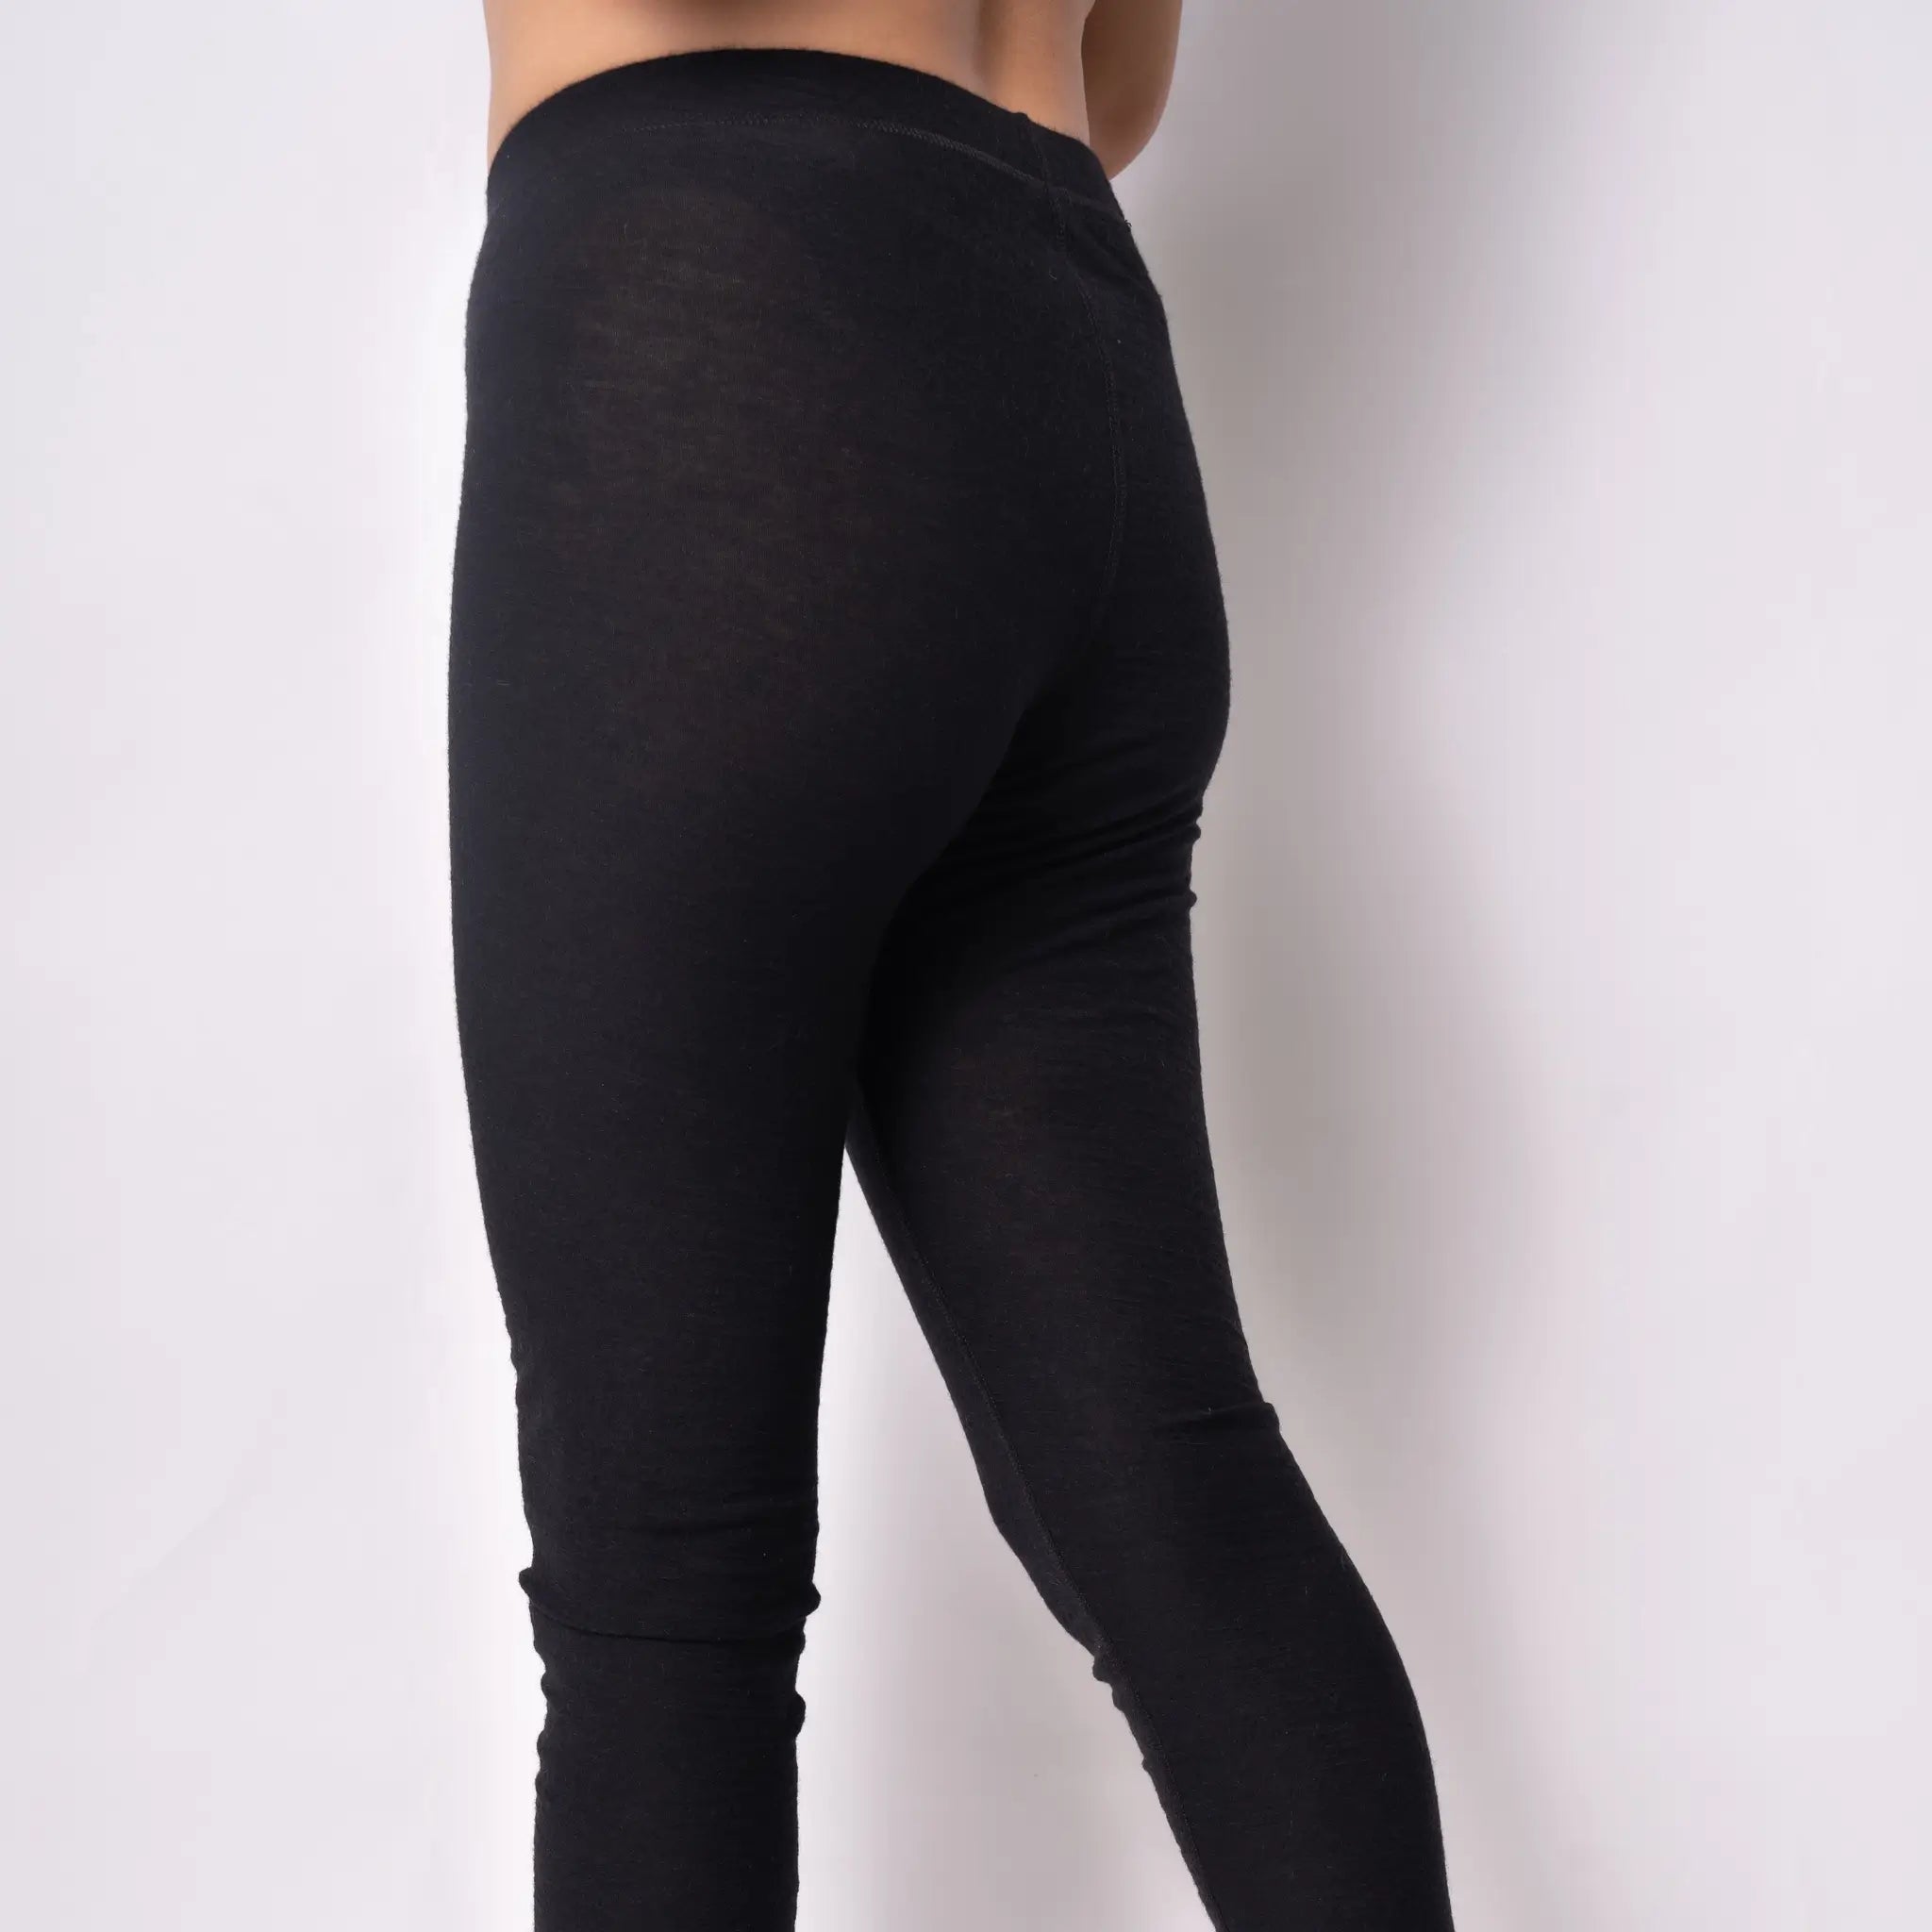 womens leggings ultralight160 all purpose color black